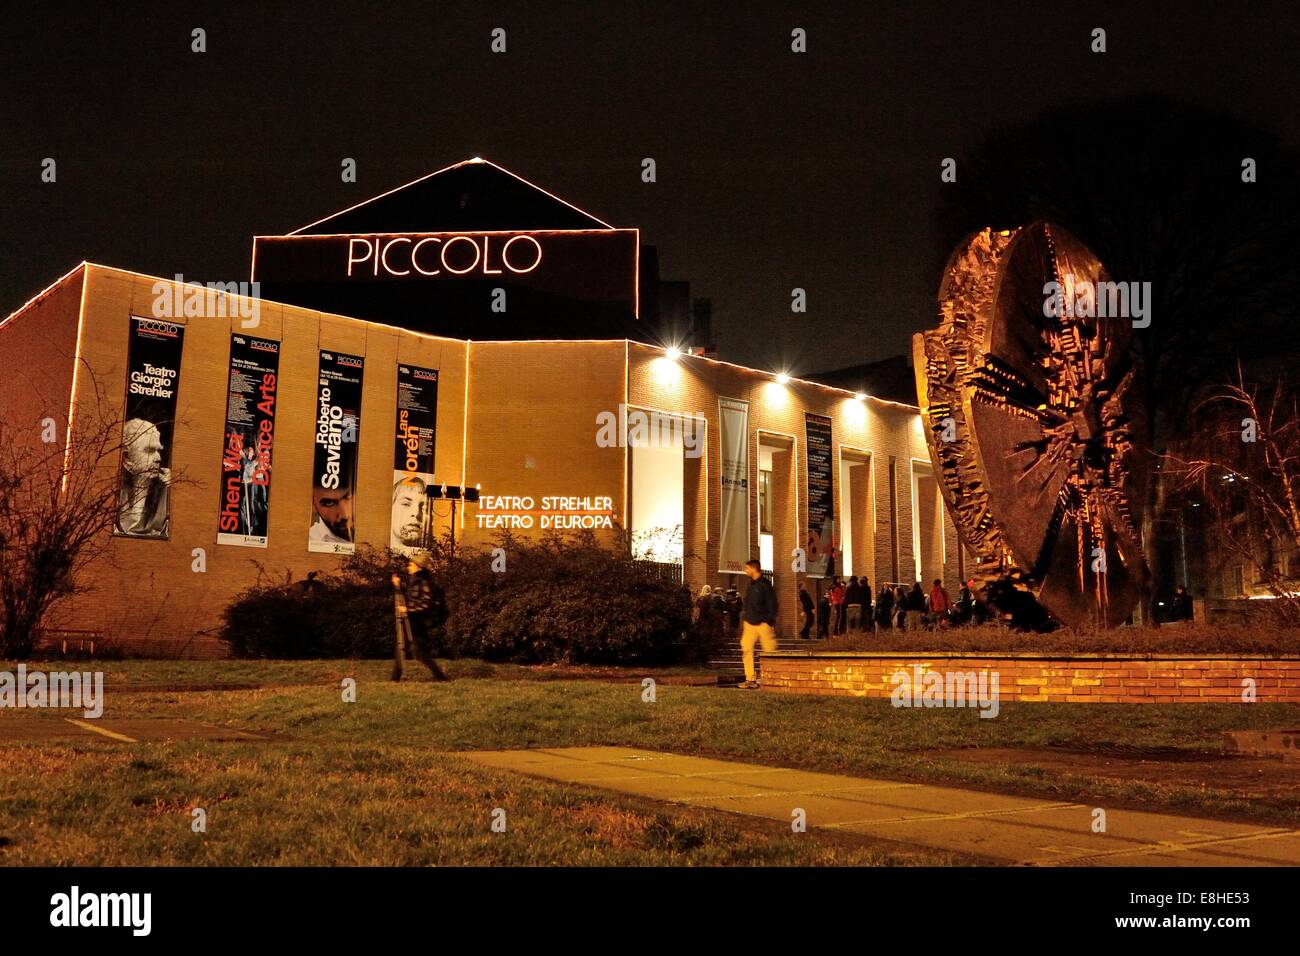 Piccolo Teatro Strehler Milan, night vision (The 'Disco' of Arnaldo Pomodoro on the right side) Stock Photo